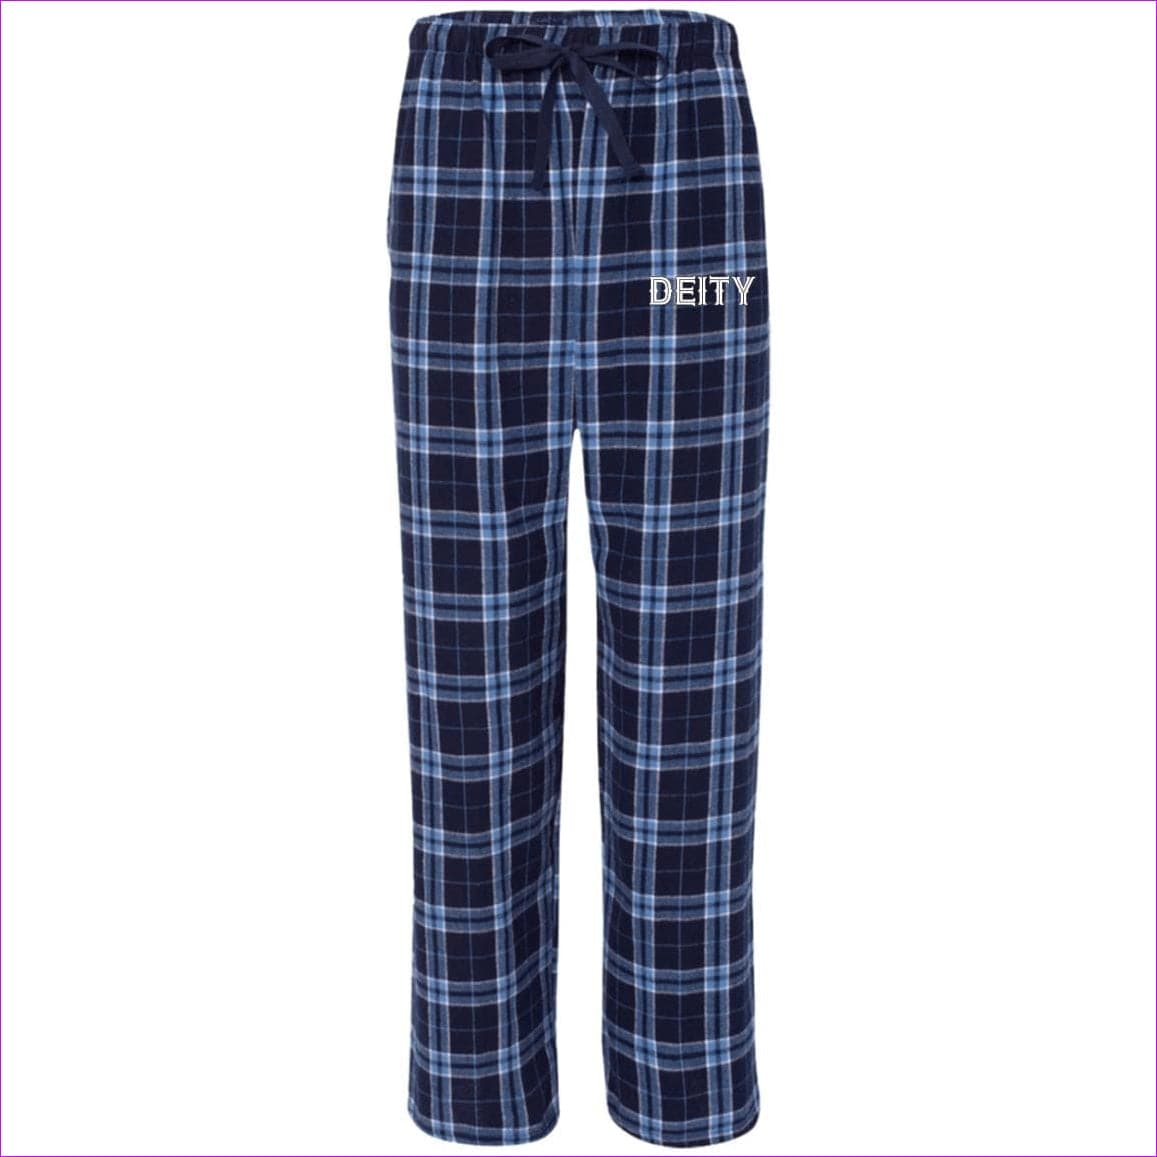 Navy/Columbia Blue - Deity Flannel Pants - unisex pajamas Pants at TFC&H Co.